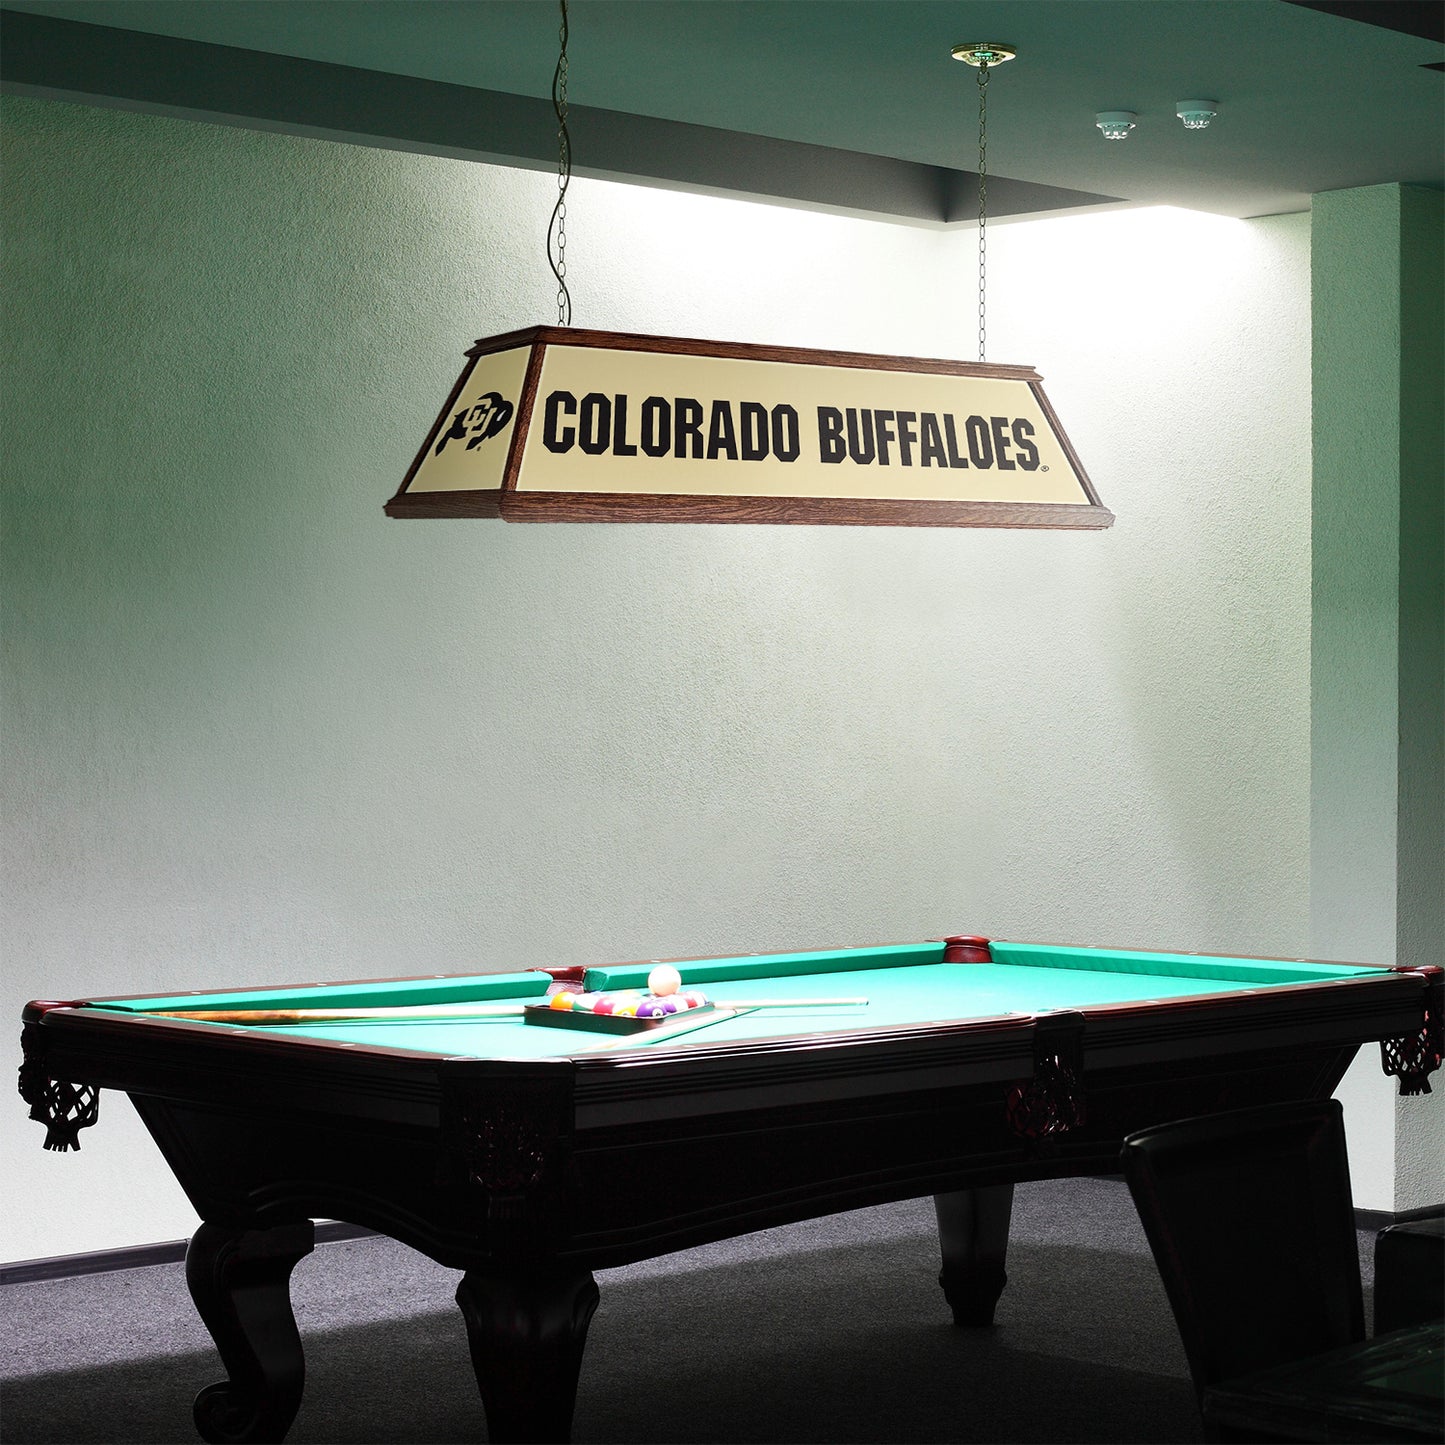 Colorado Buffaloes Premium Pool Table Light Room View